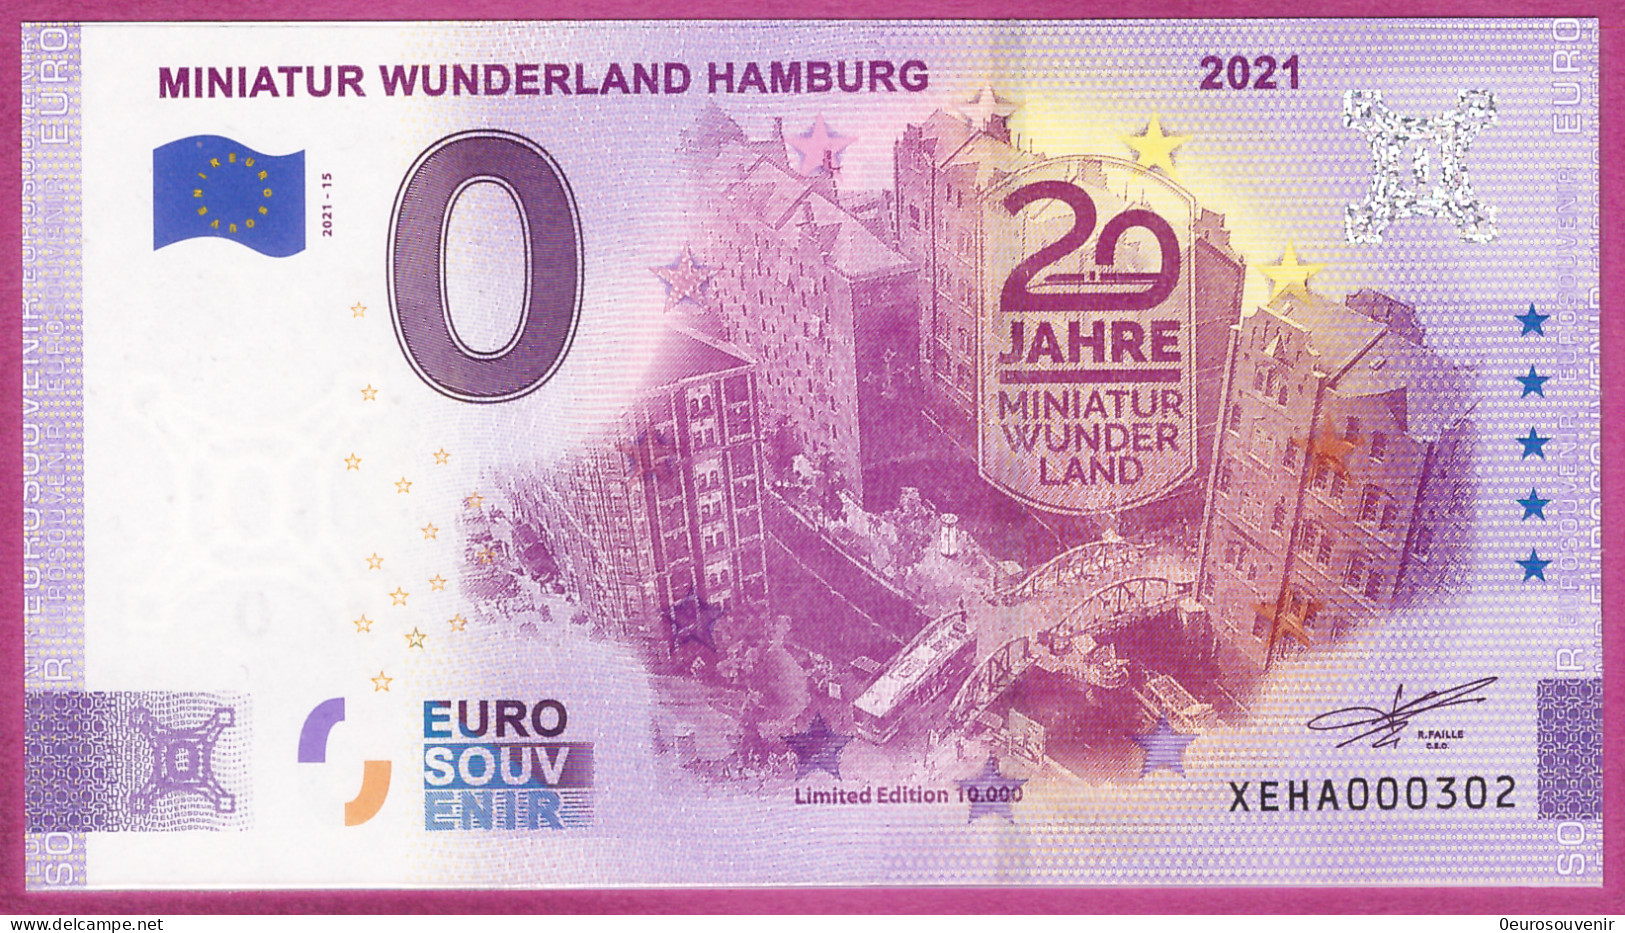 0-Euro XEHA 2021-15 MINIATUR WUNDERLAND HAMBURG - 20 JAHRE 2021 - Pruebas Privadas